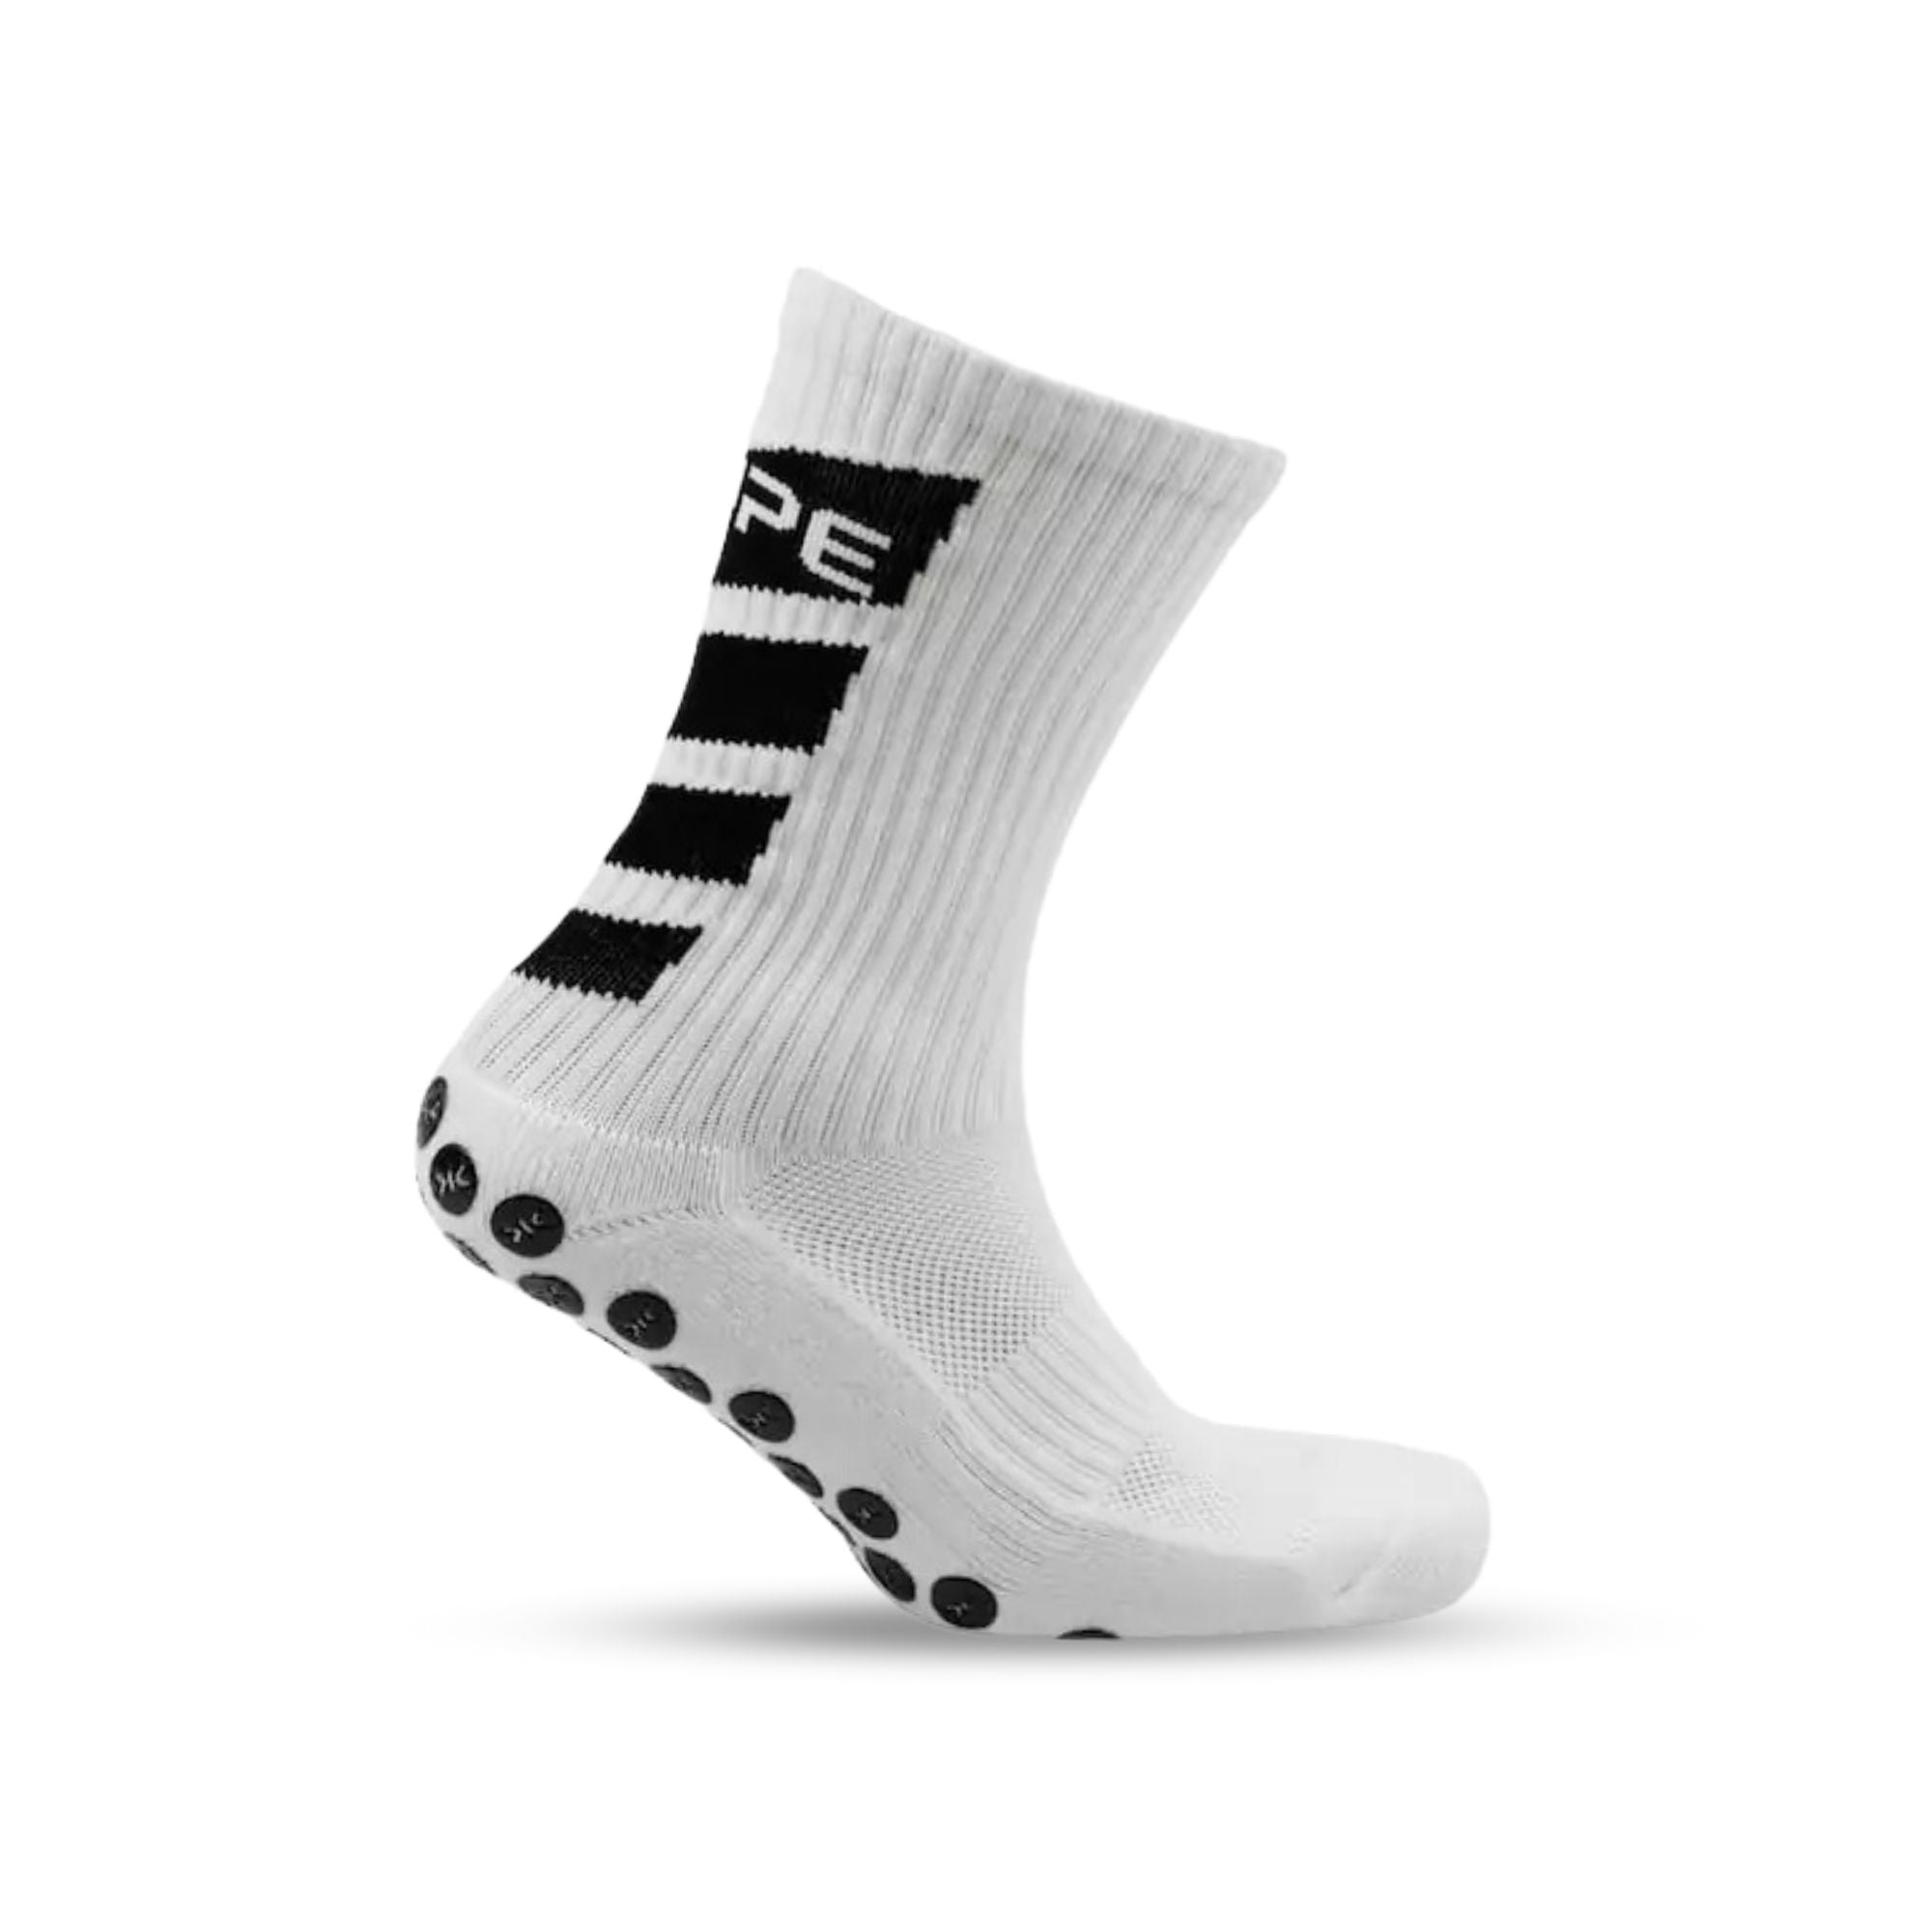 padelx kupe active grip sock white calf length